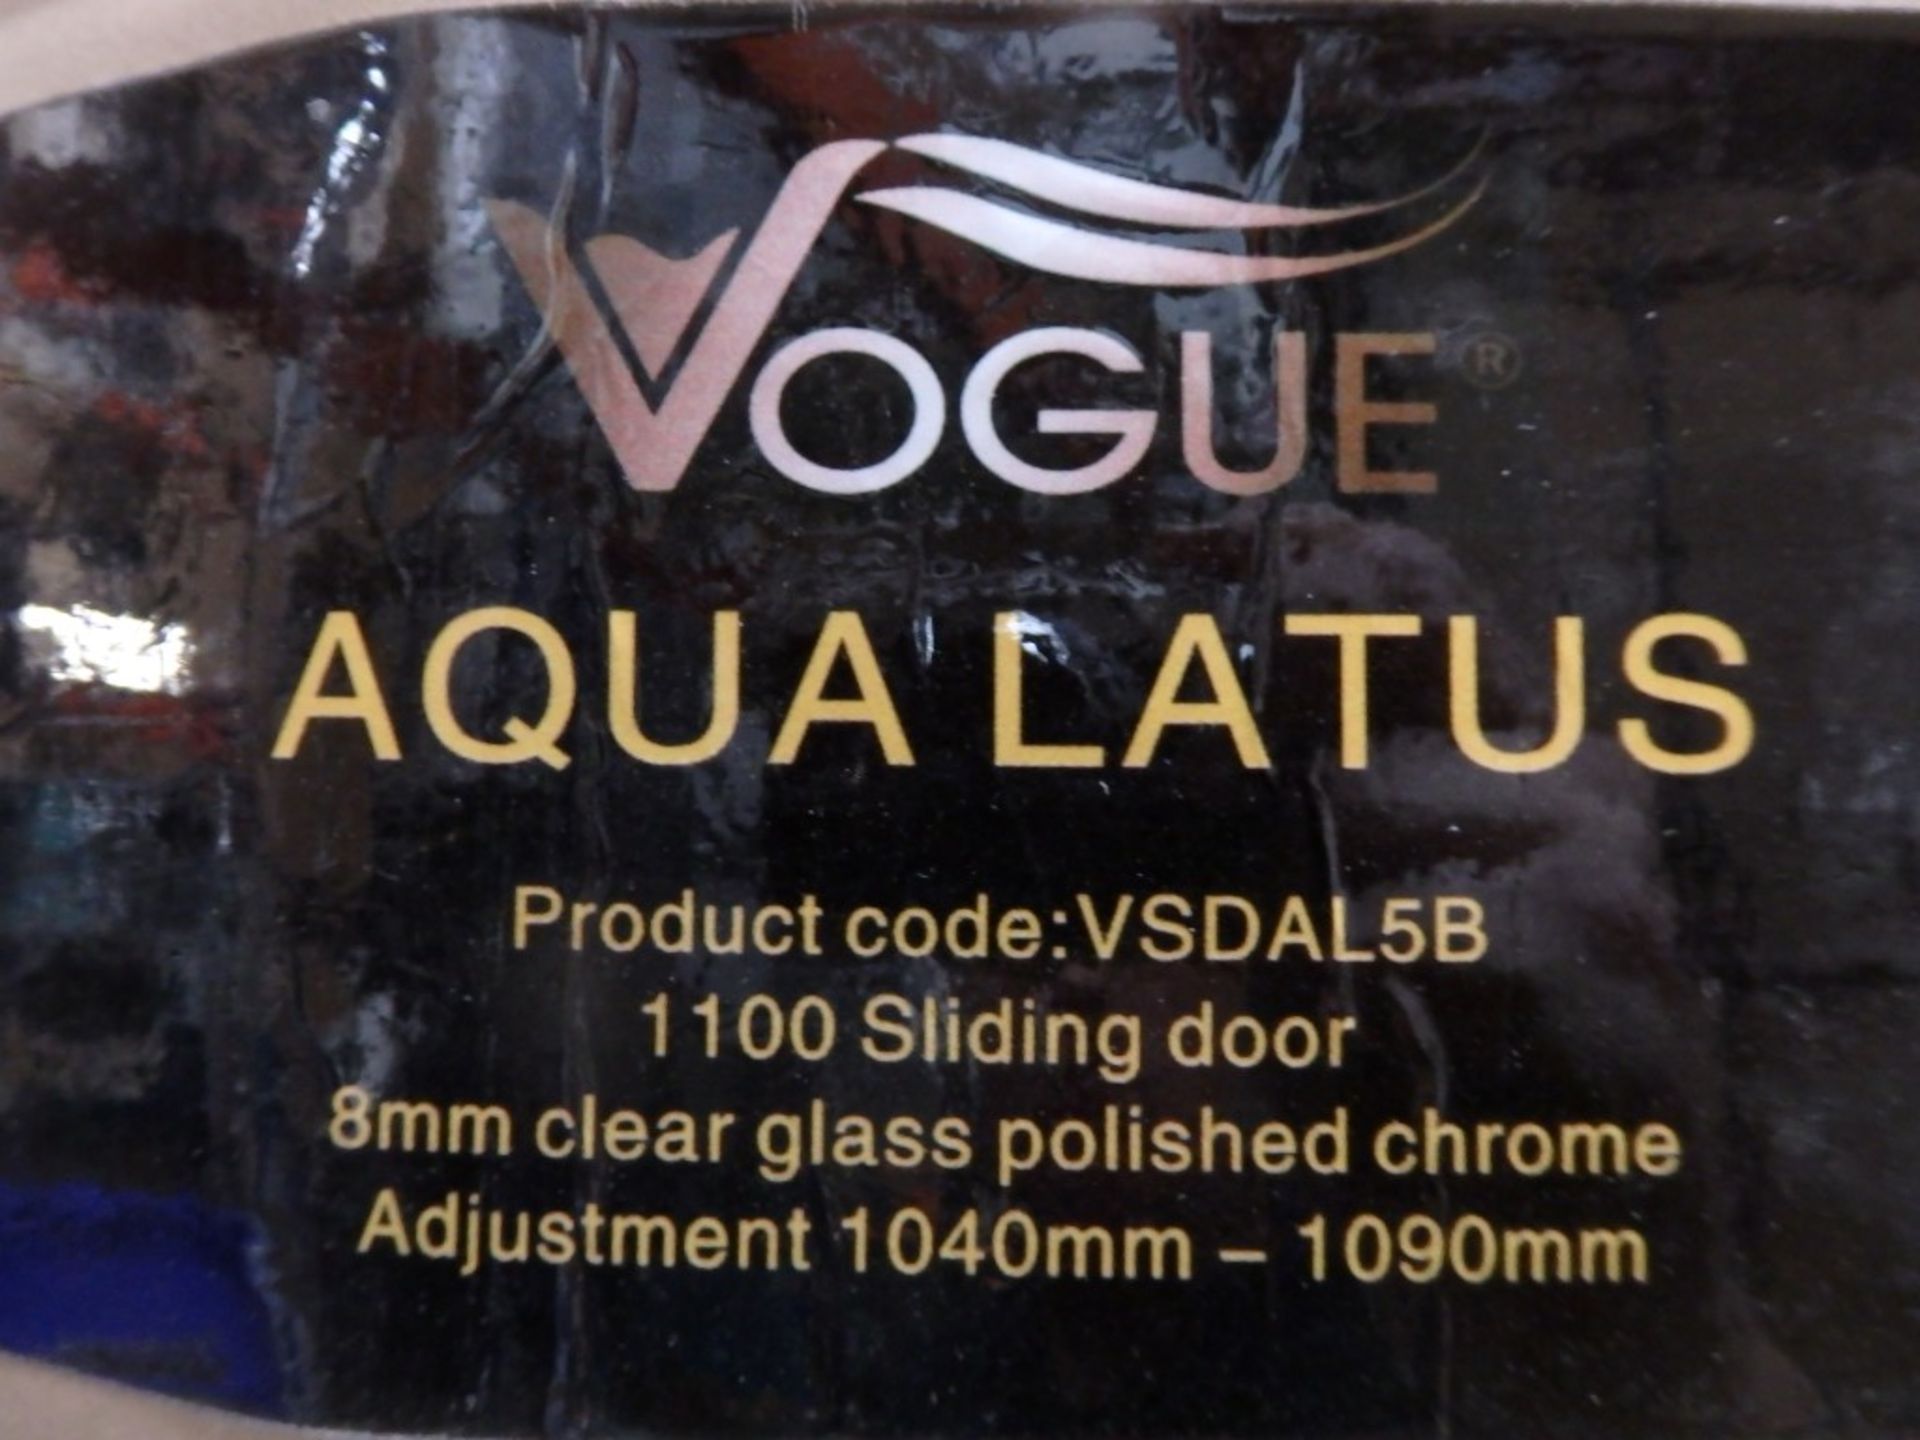 1 x Aqua Latus 1100 Slider 8mm Clear Chrome RRP £440.00 - Polished Chrome Profile Finish - CL044 - - Image 2 of 2